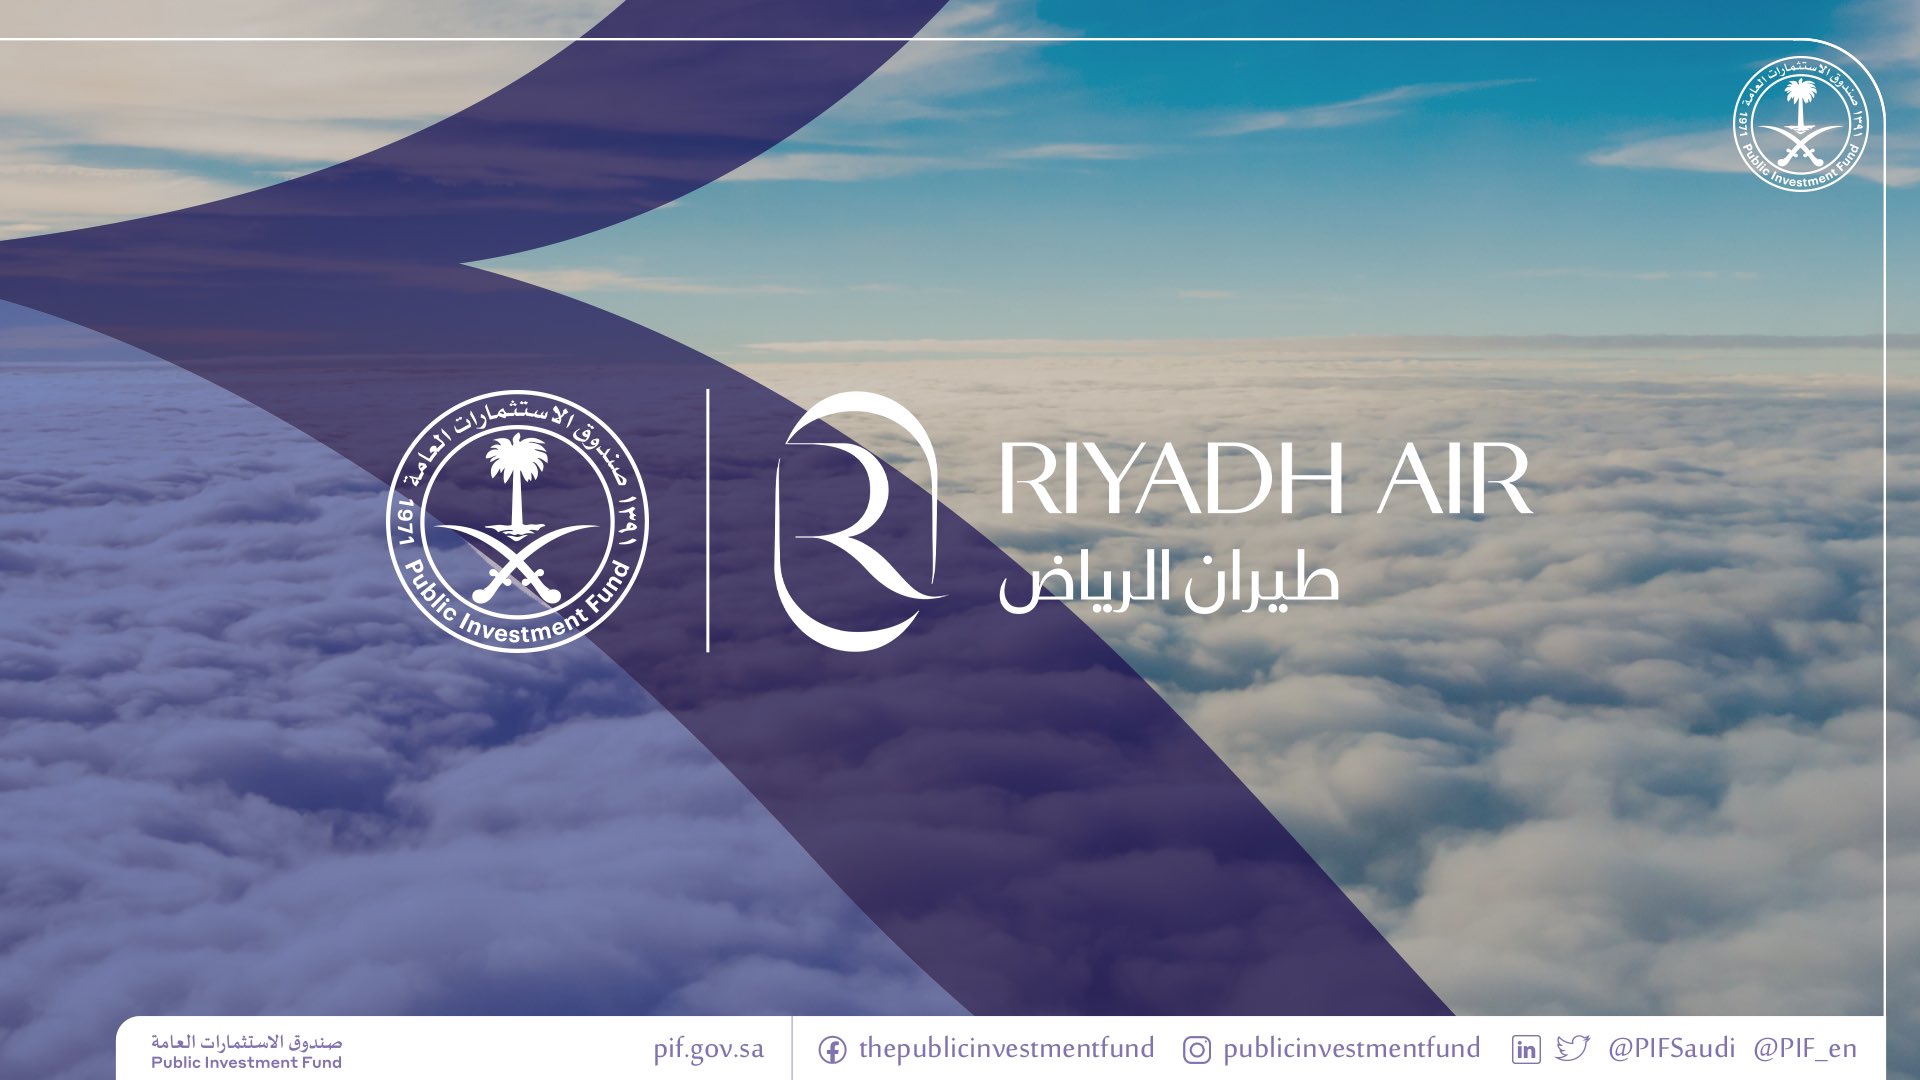 Saudi Arabia announces the creation of a new national company , Riyadh Air – formerly known as RIA